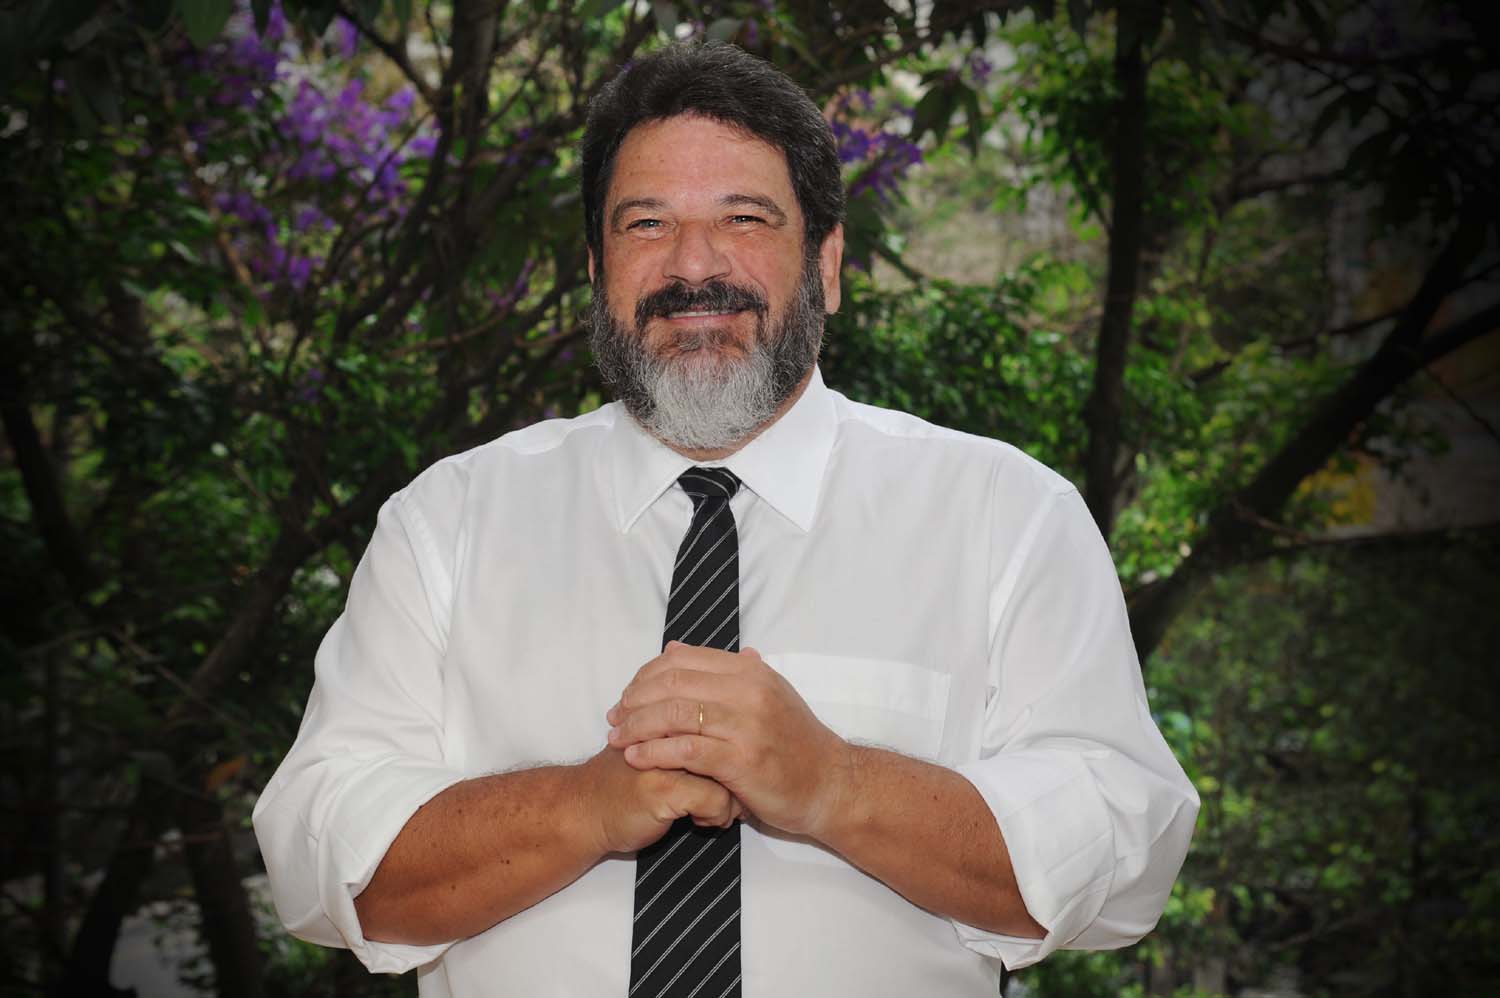 Paulo Roberto Lobo Leite - Vendedor de varejo - Mário games